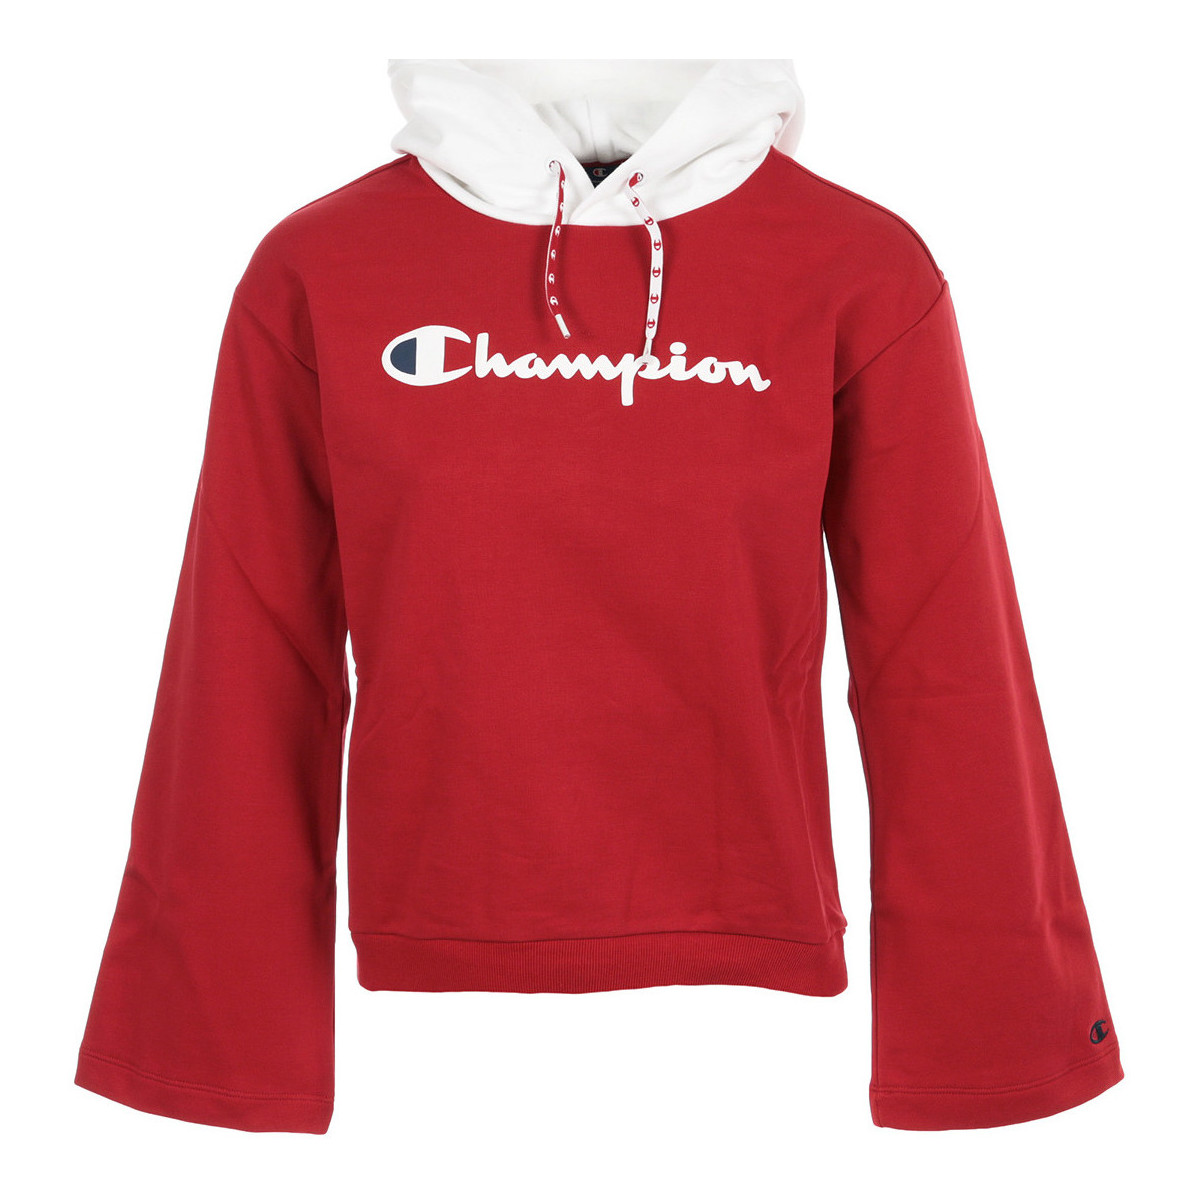 Textiel Dames Sweaters / Sweatshirts Champion Hooded Sweatshirt Wn's Rood